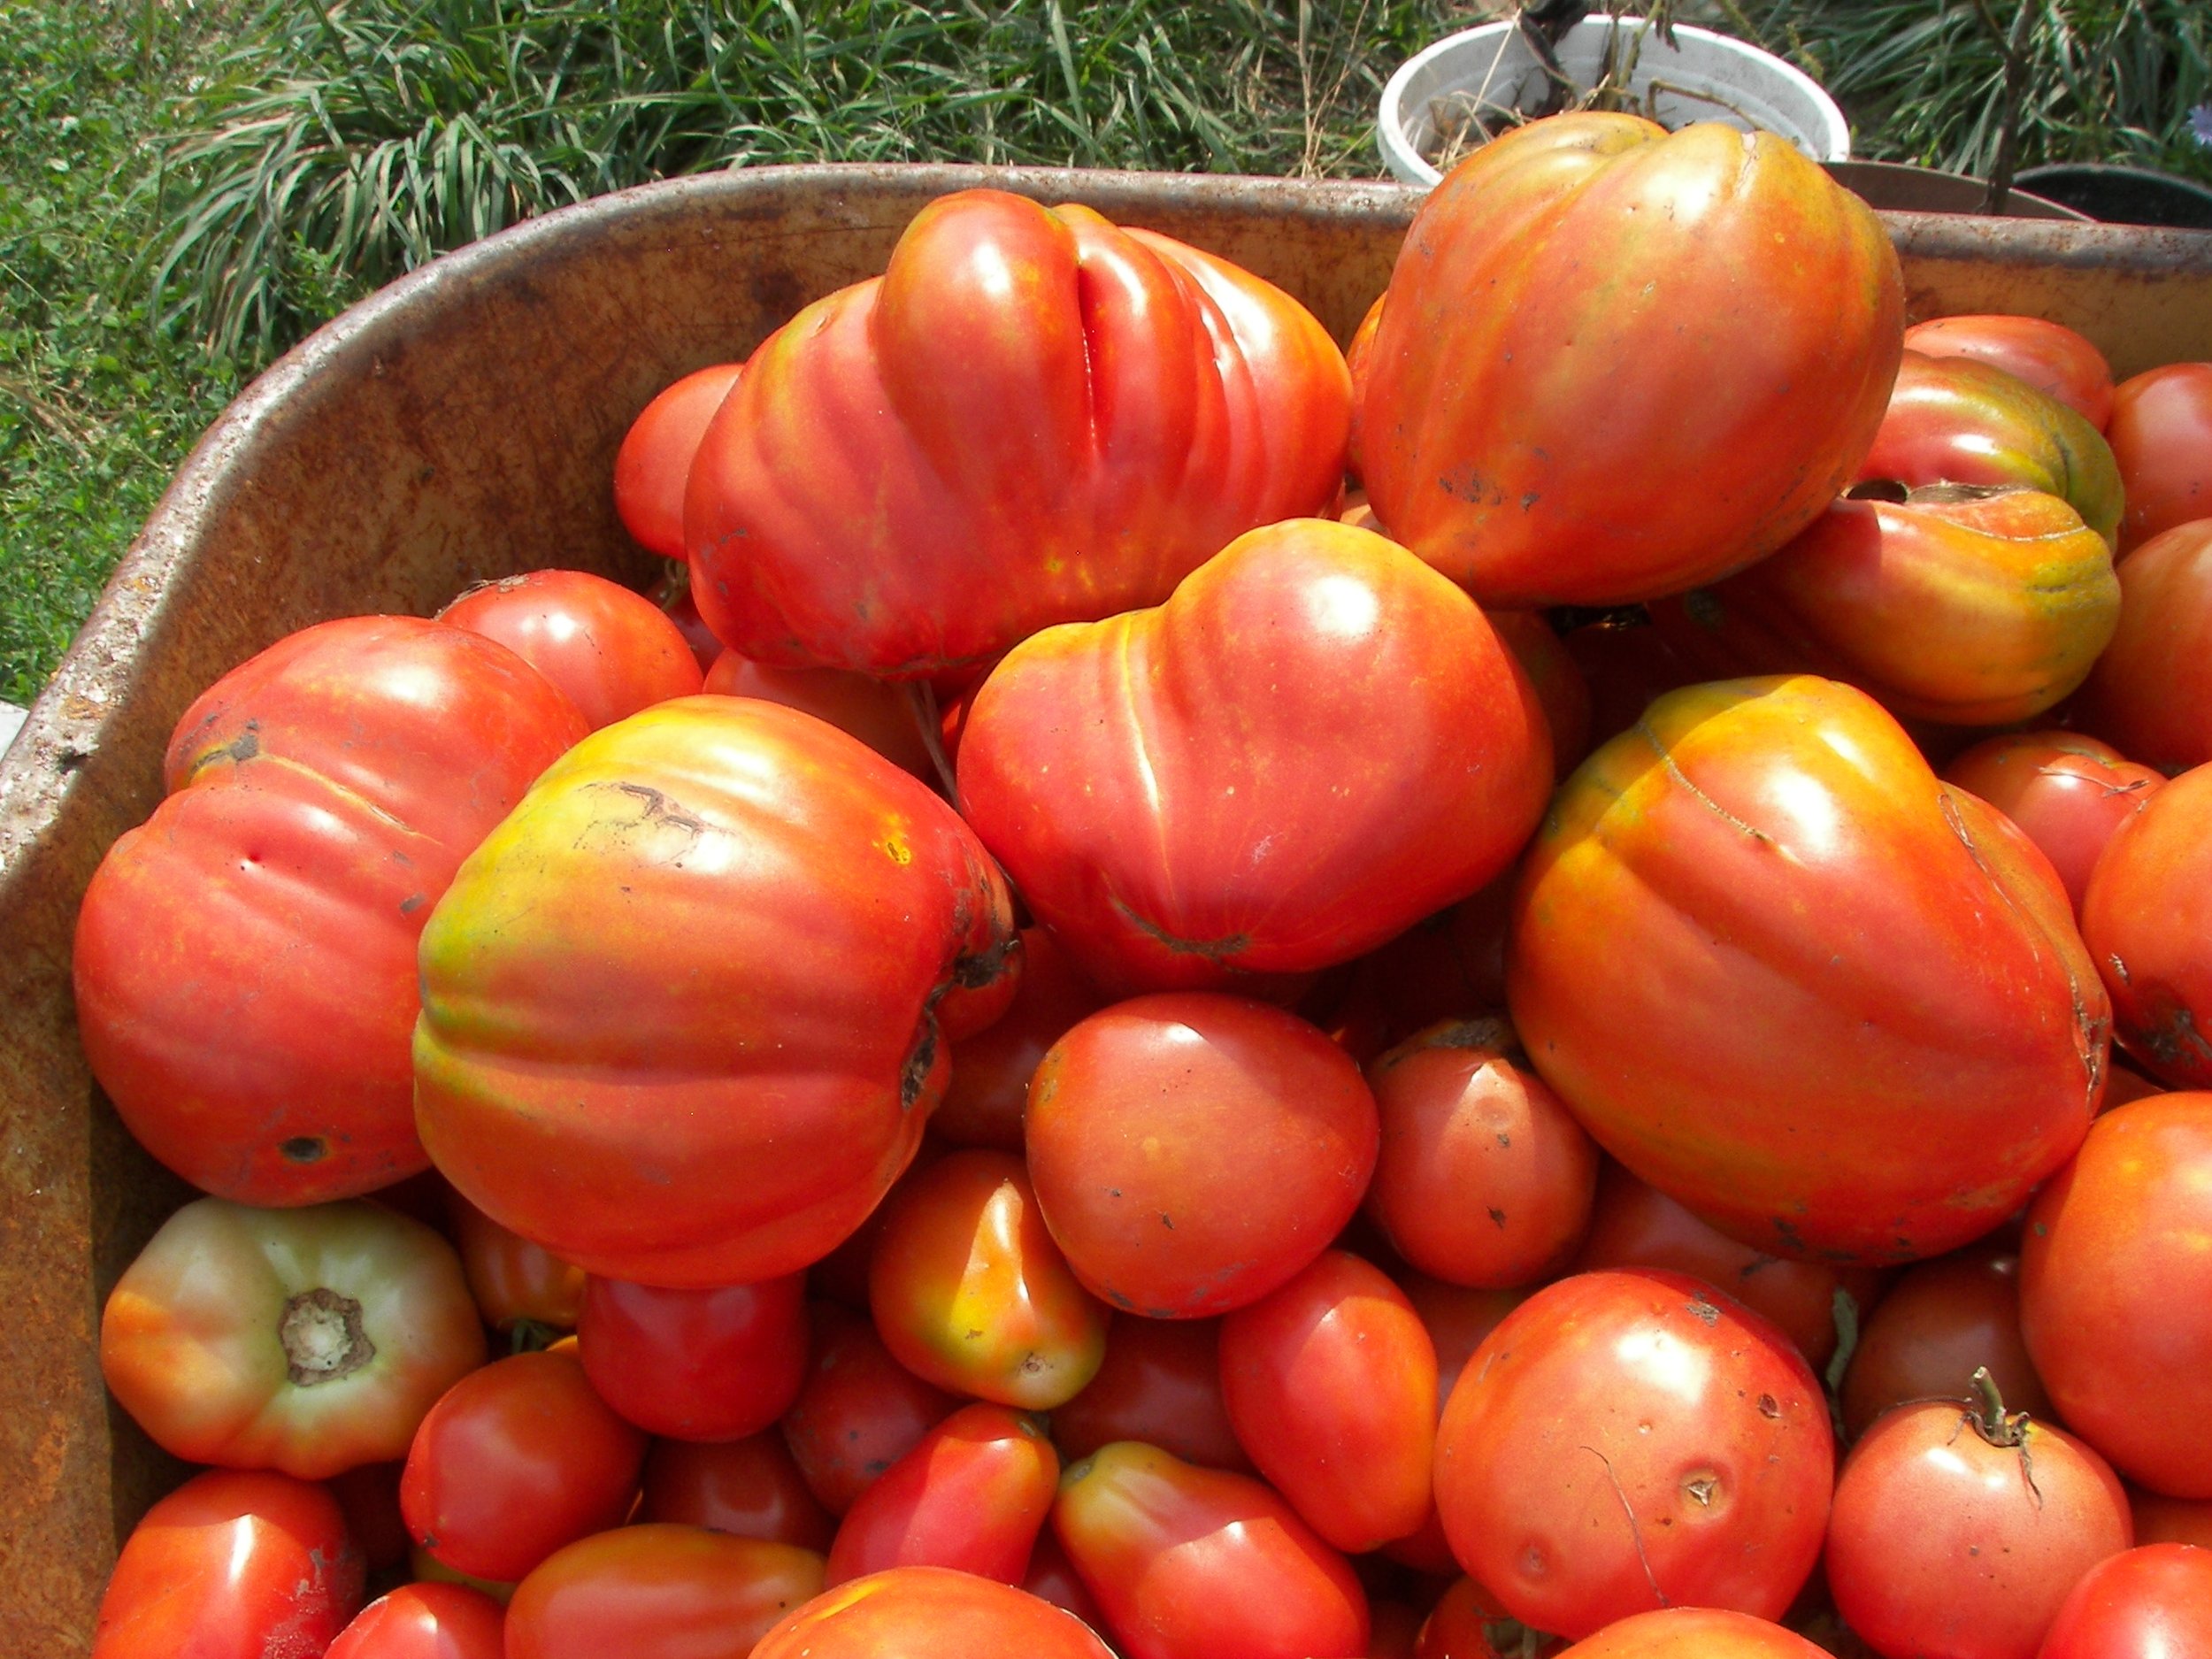 A wheelbarrow load of tomatoes.JPG